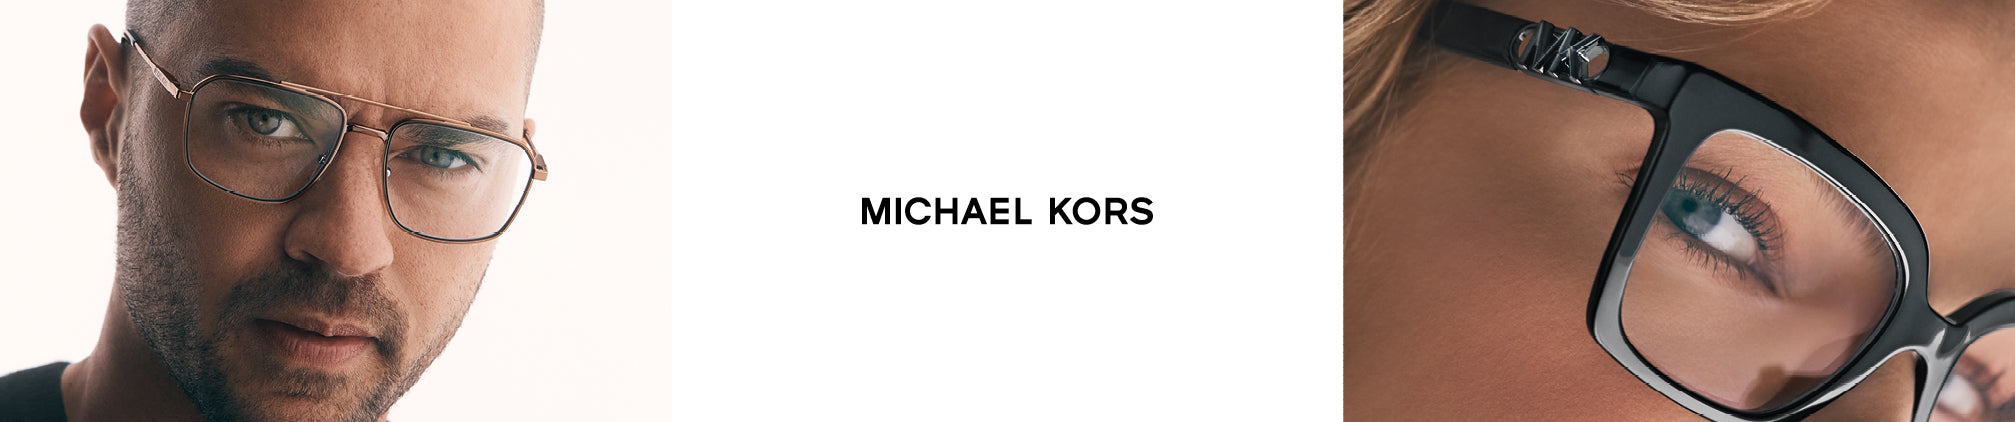 Michael Kors Glasses | Michael Kors Prescription Glasses – Fashion Eyewear